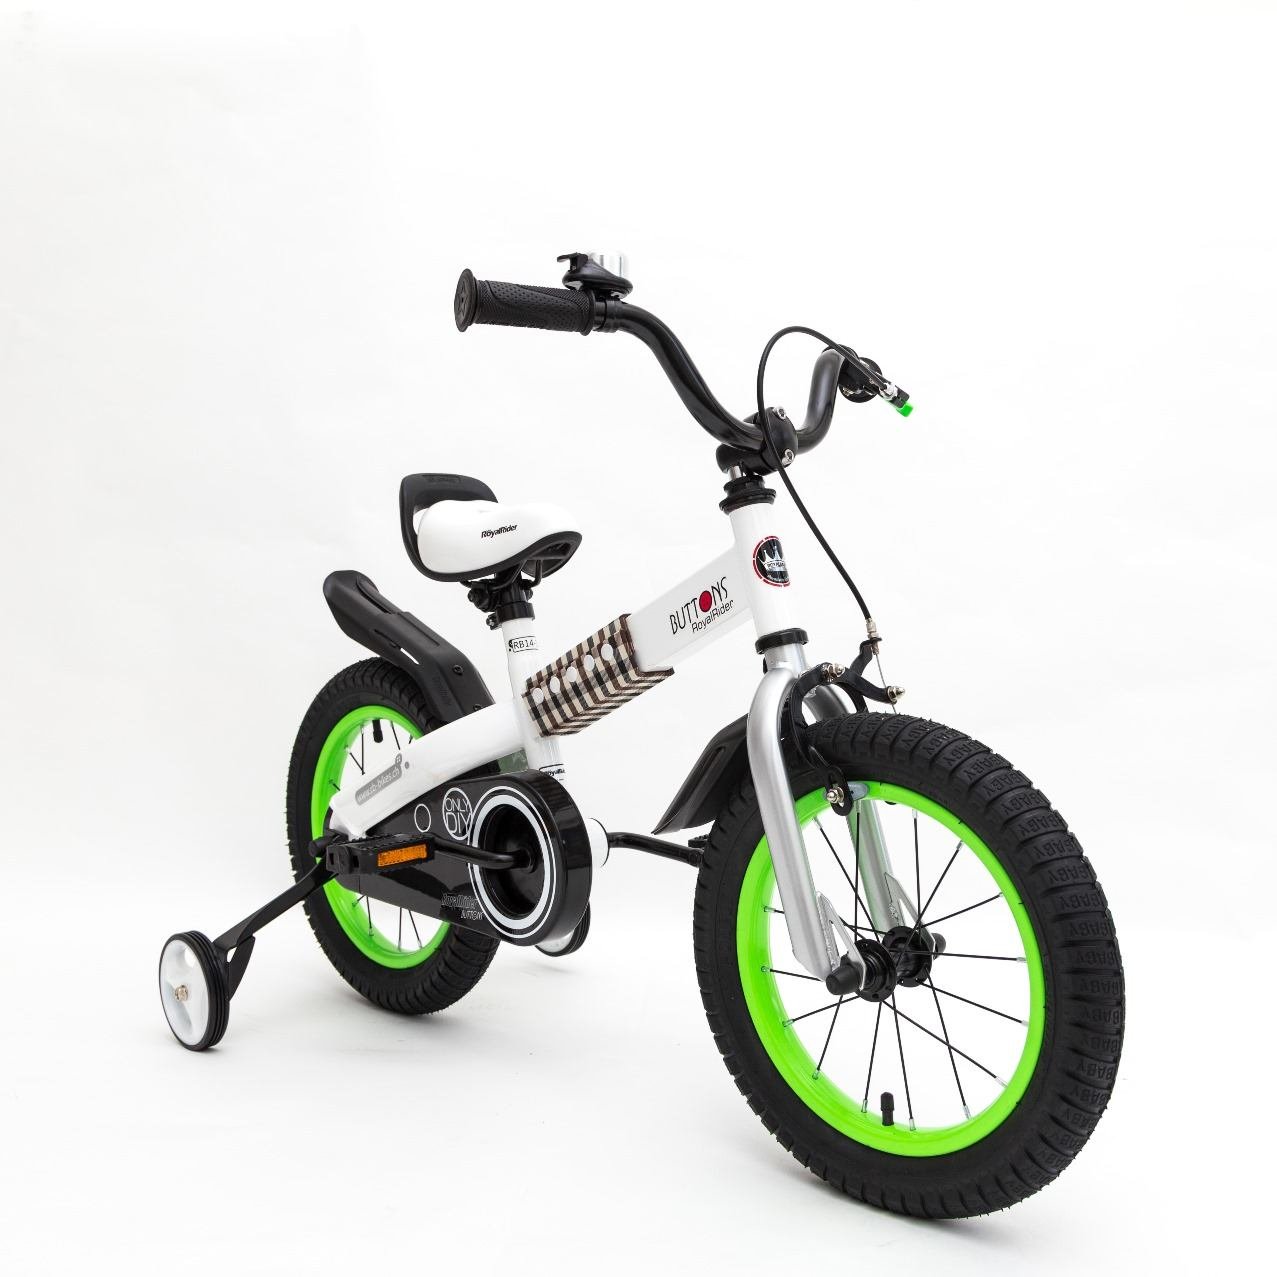 RoyalBaby bambini bicicletta pulsanti 14 pollici verde